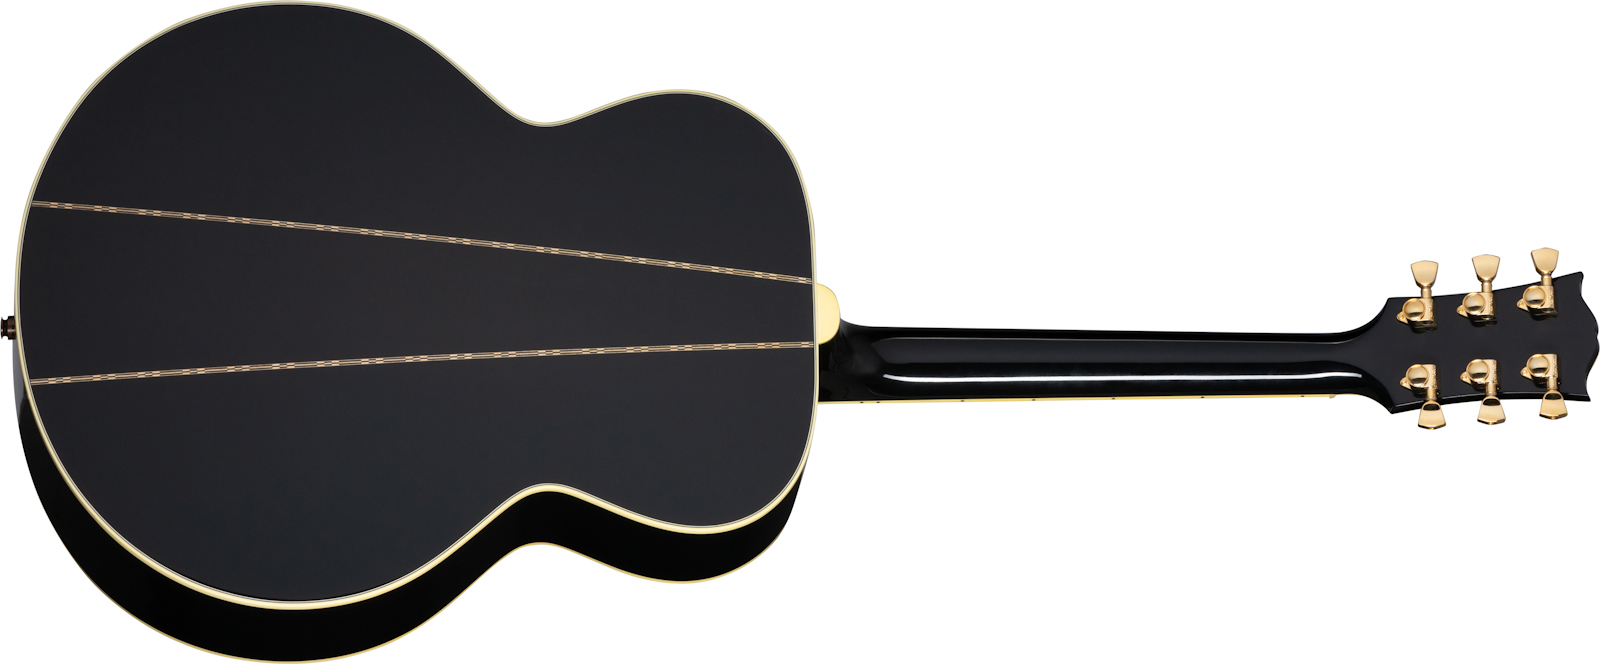 Gibson Custom Shop Elvis Presley Sj-200 Signature Jumbo Epicea Palissandre Rw - Ebony - Guitarra acústica & electro - Variation 1